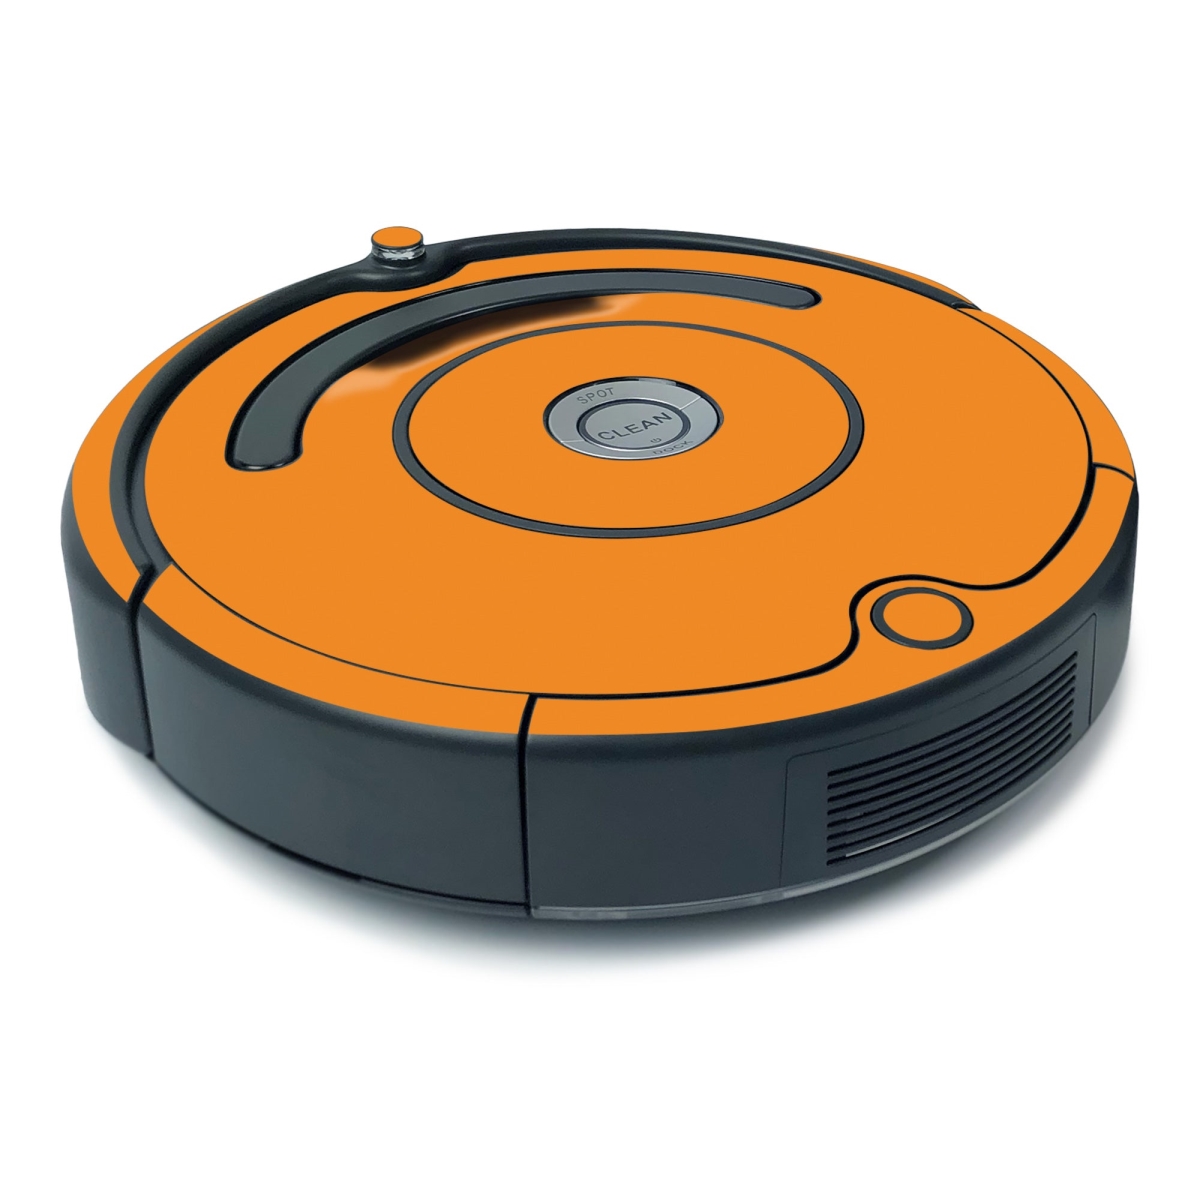 Picture of MightySkins IRRO675MIN-Solid Orange Skin for iRobot Roomba 675 Minimal Coverage - Solid Orange